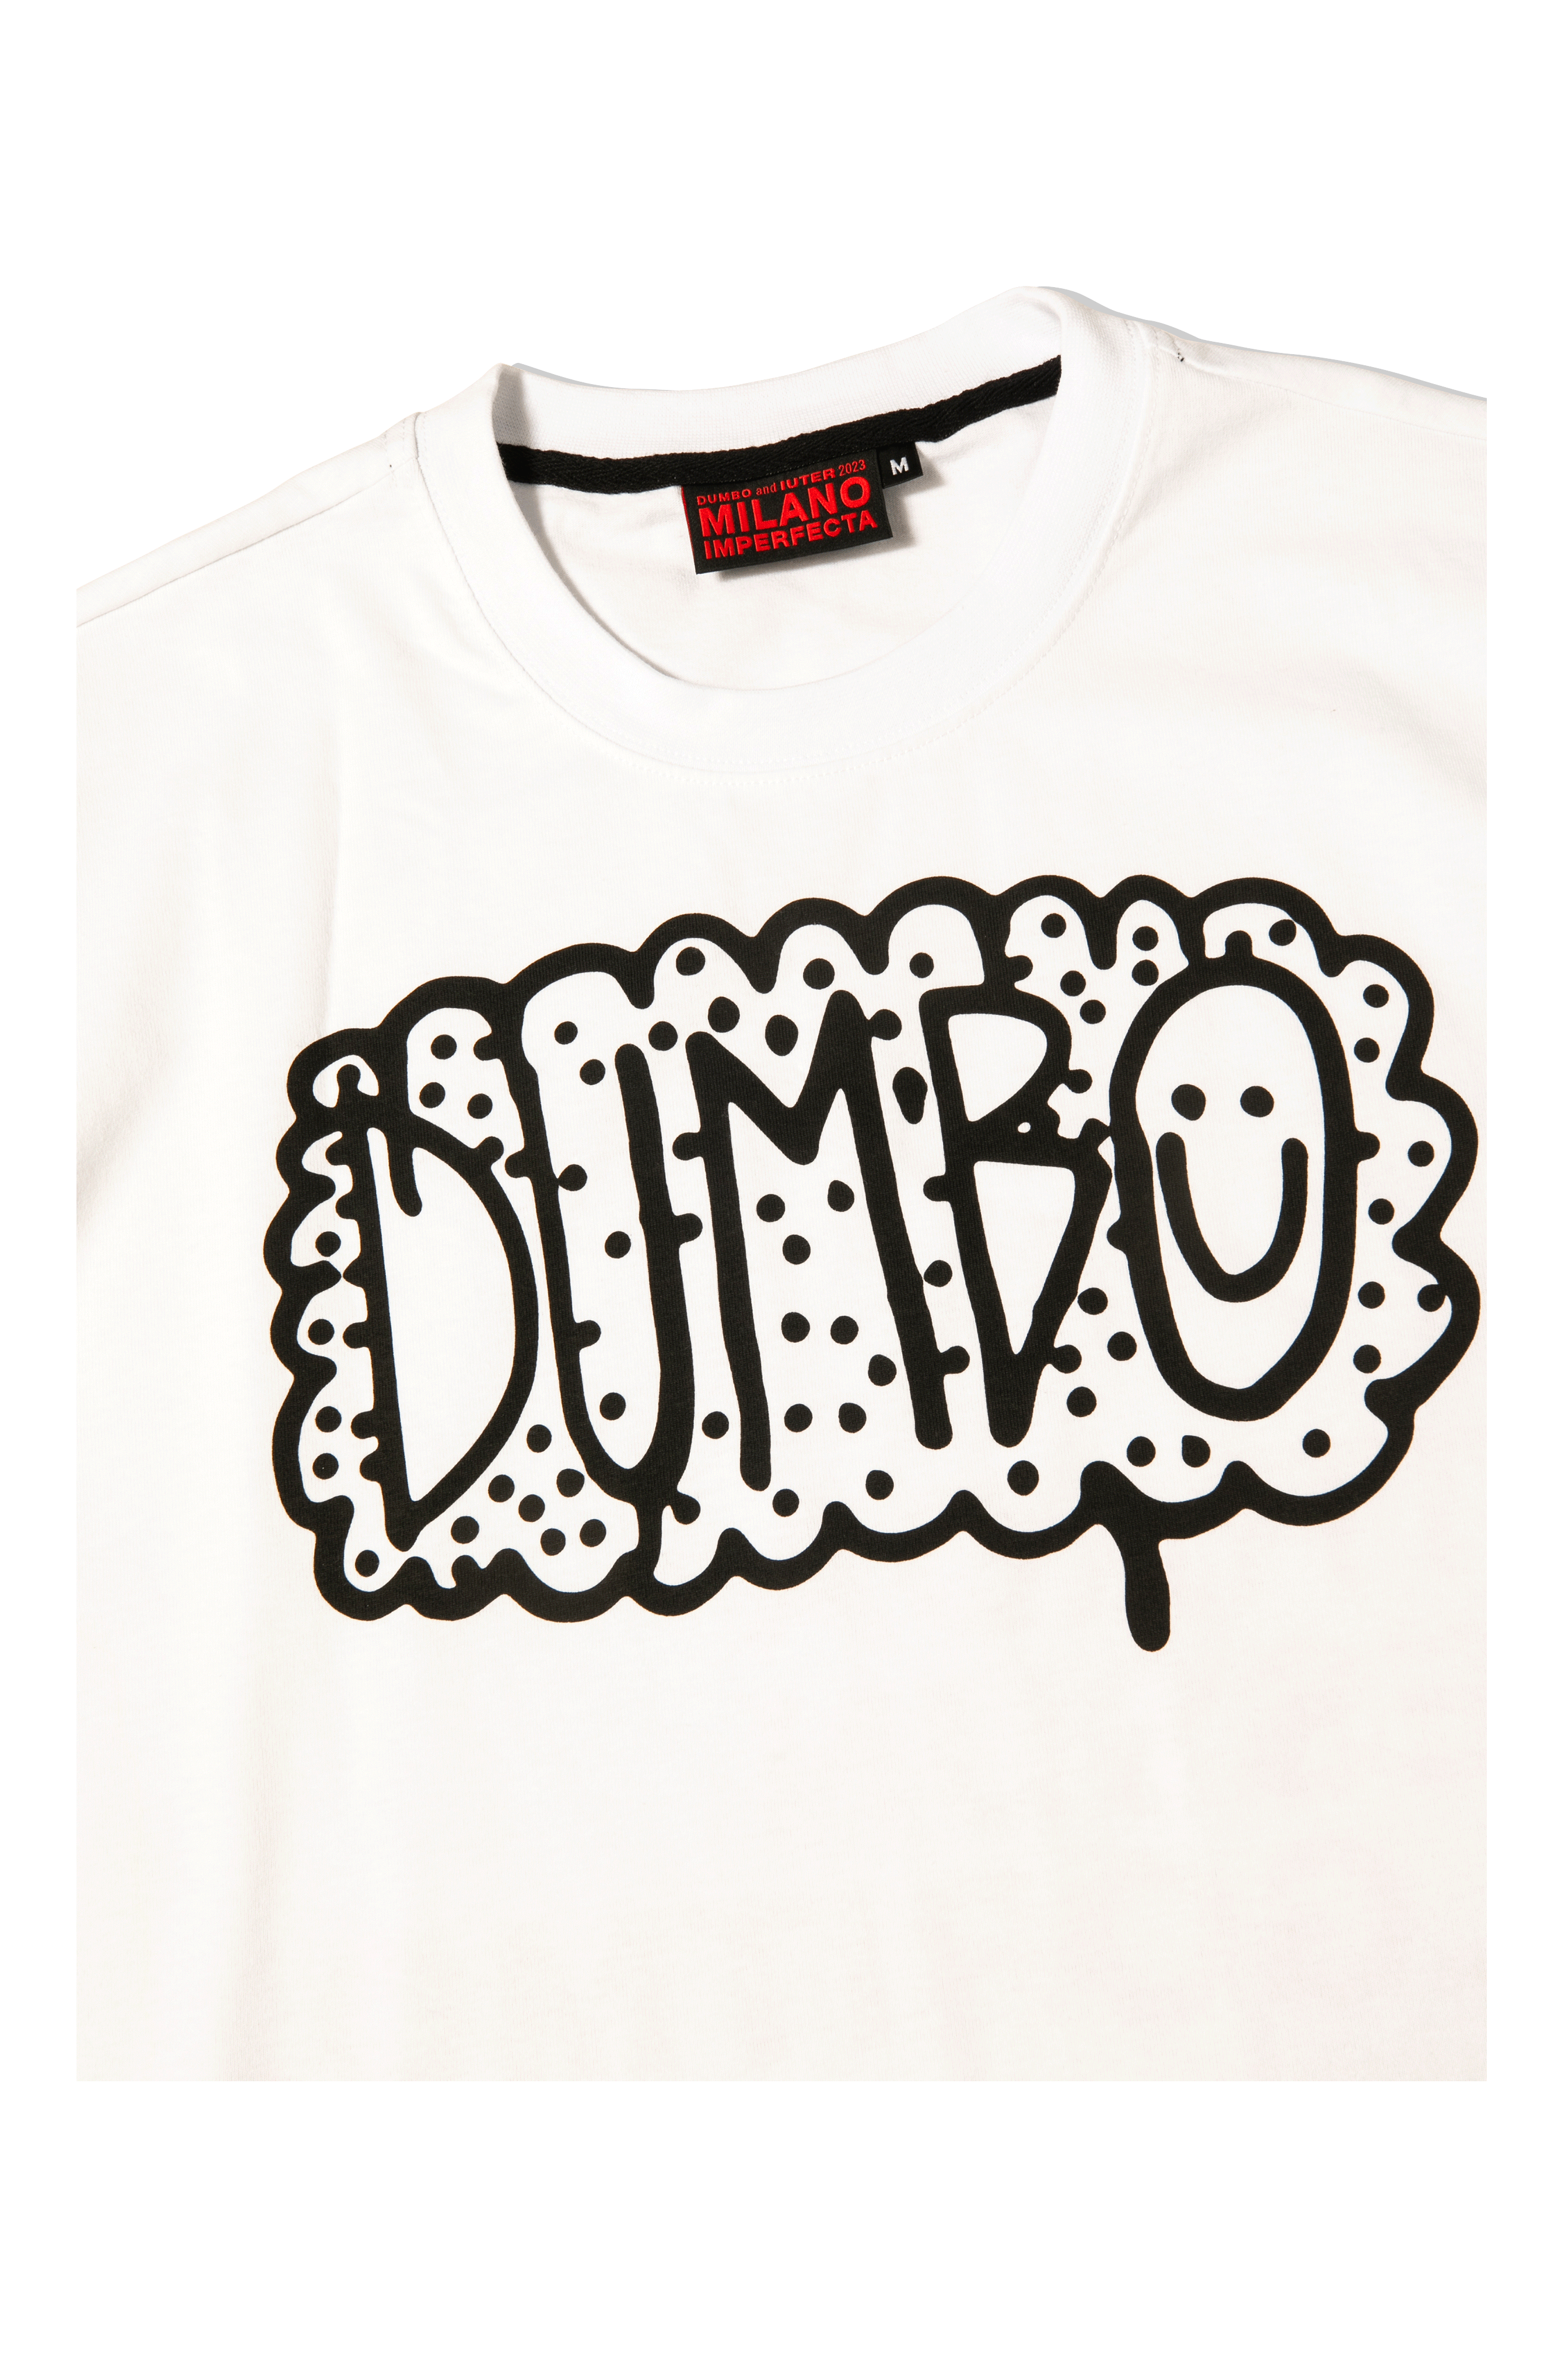 Imperfecta T-Shirt x Dumbo